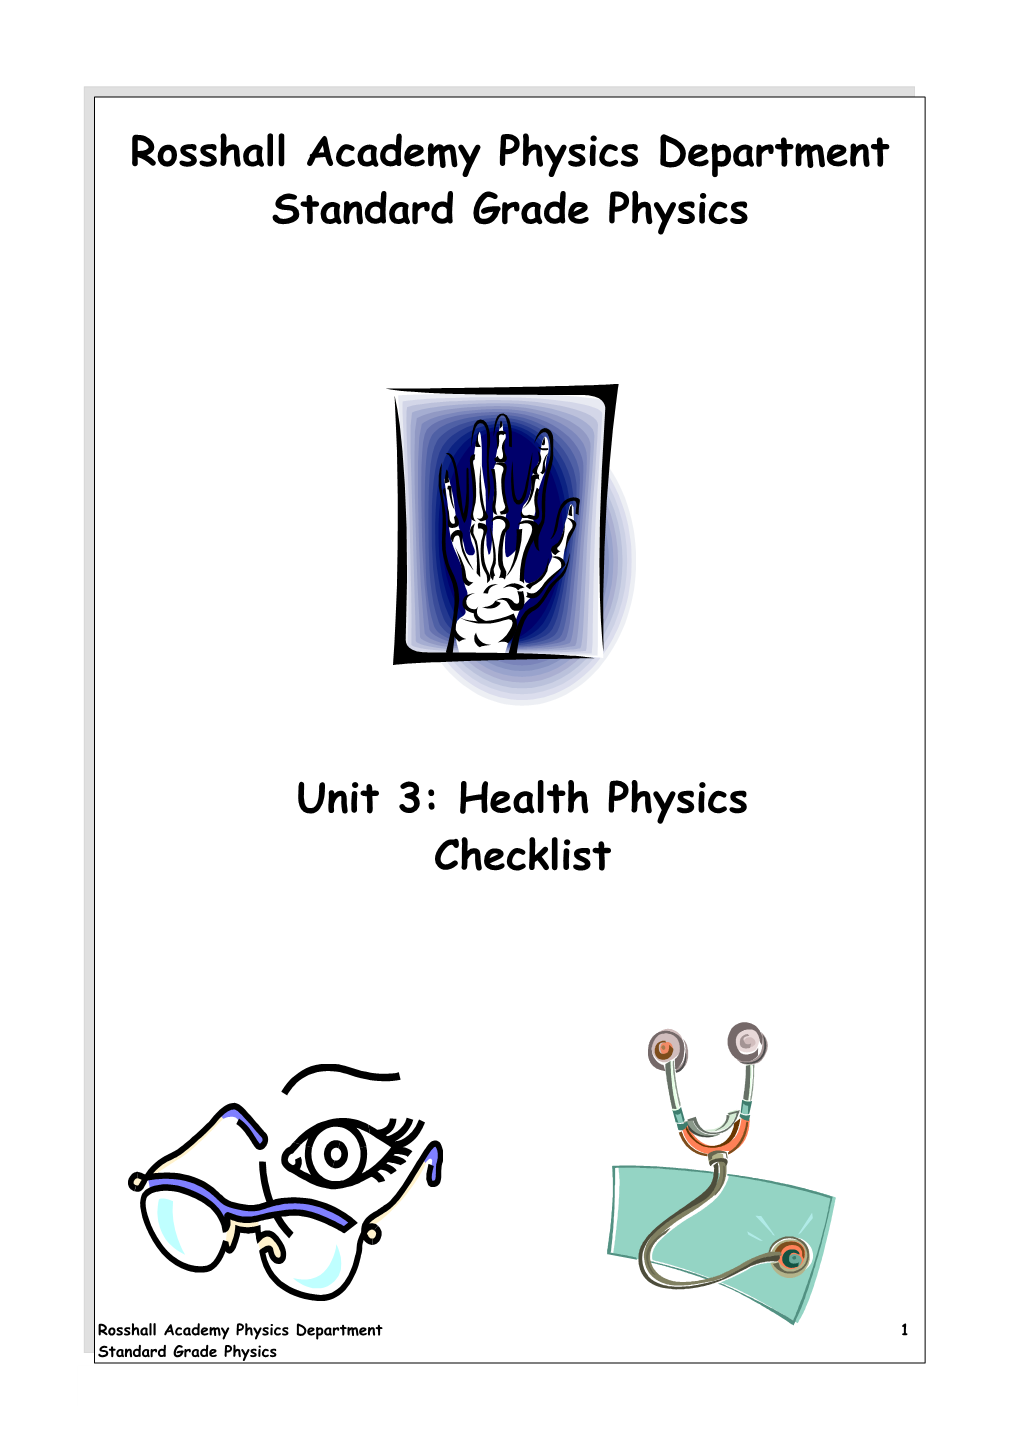 Standard Grade Physics: Health Physics- Checklist